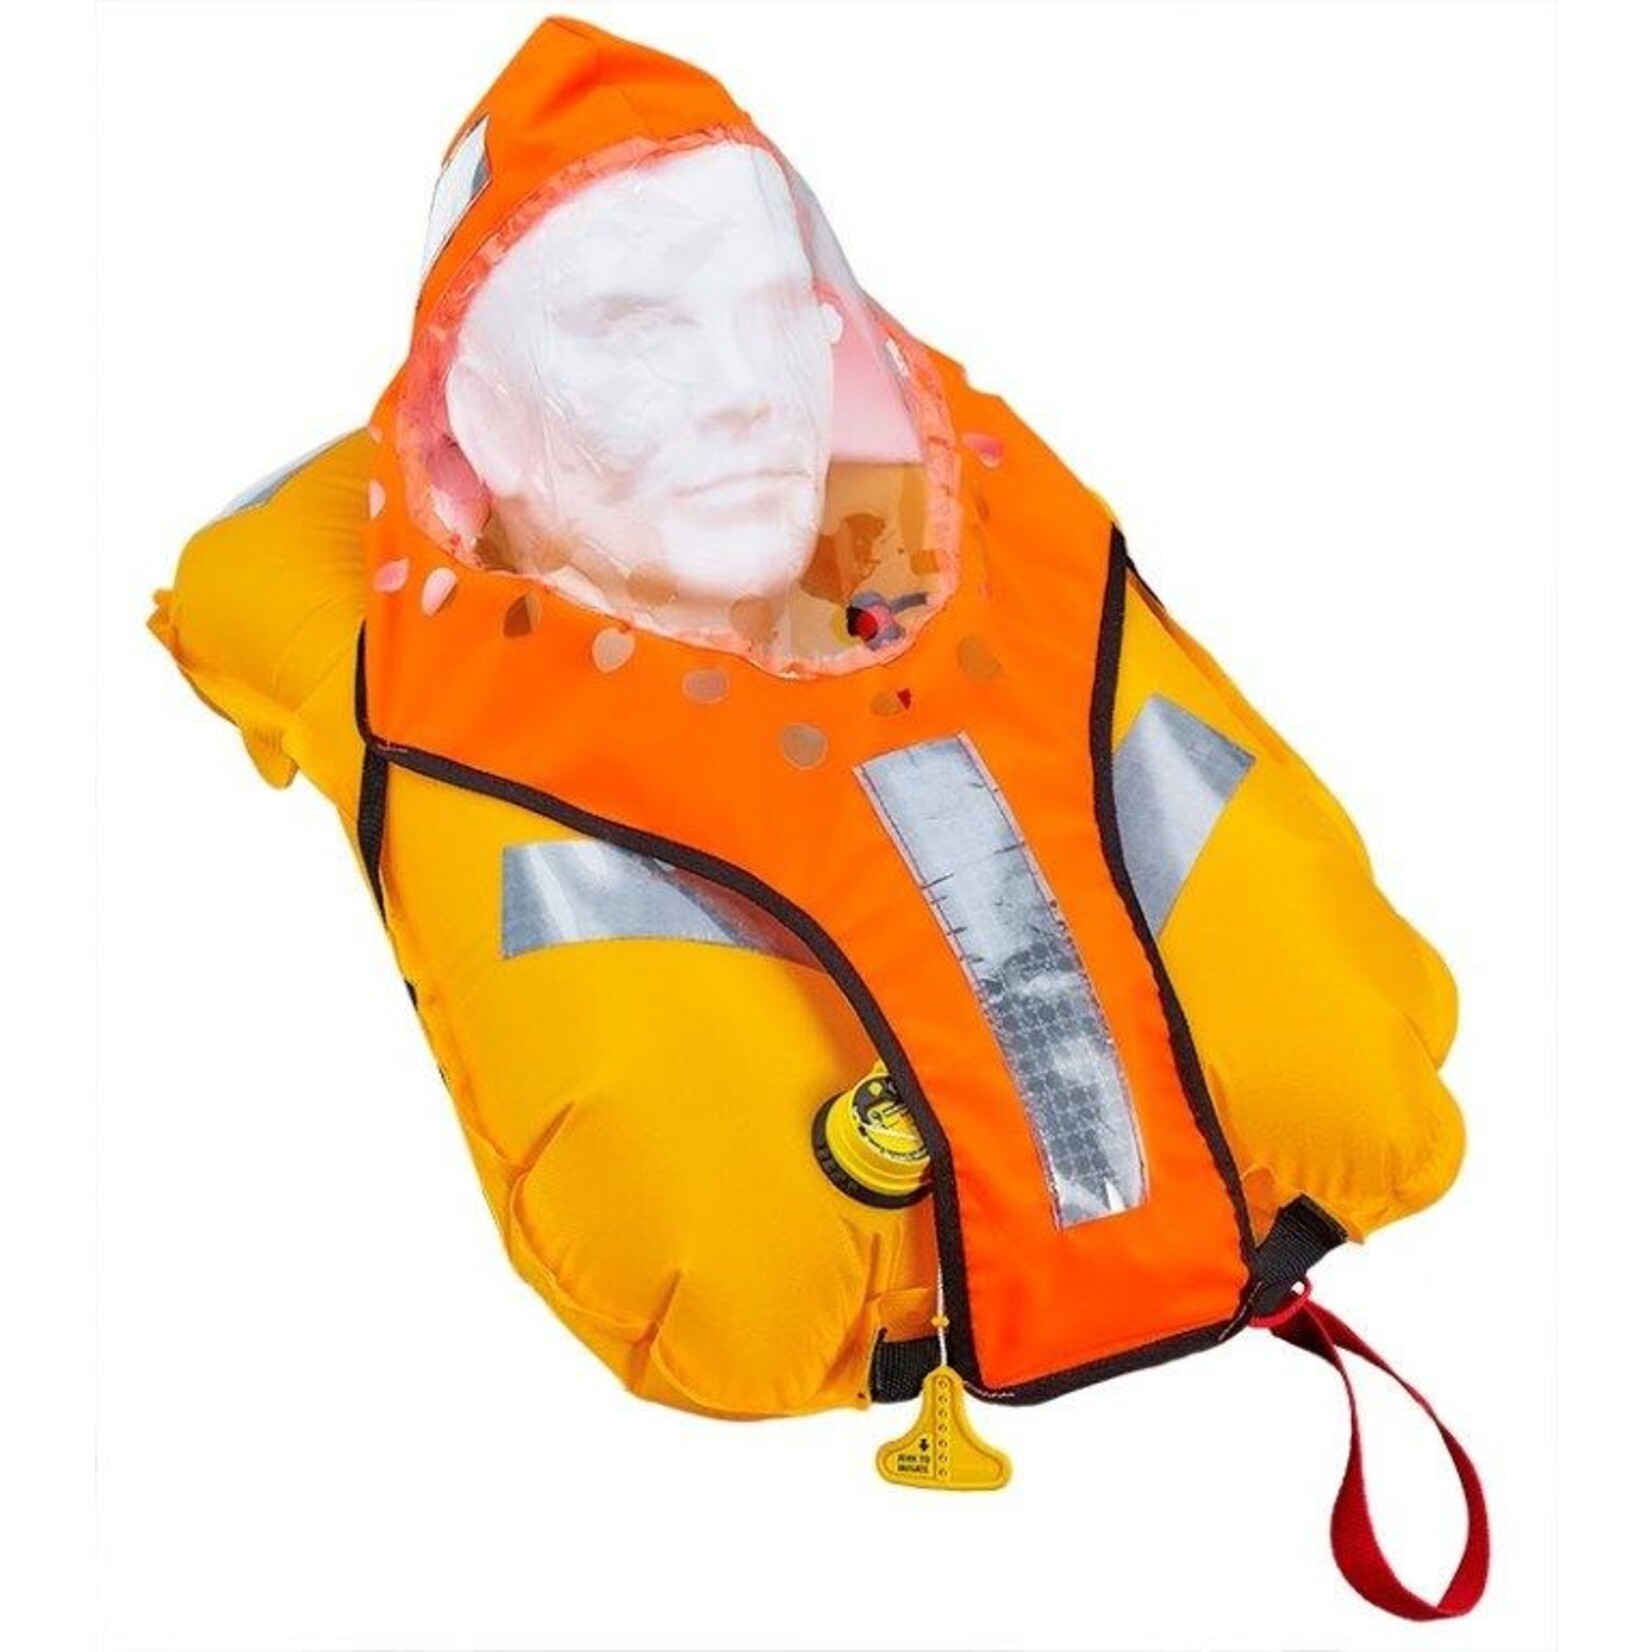 Plastimo Sprayhood for inflatable lifejackets